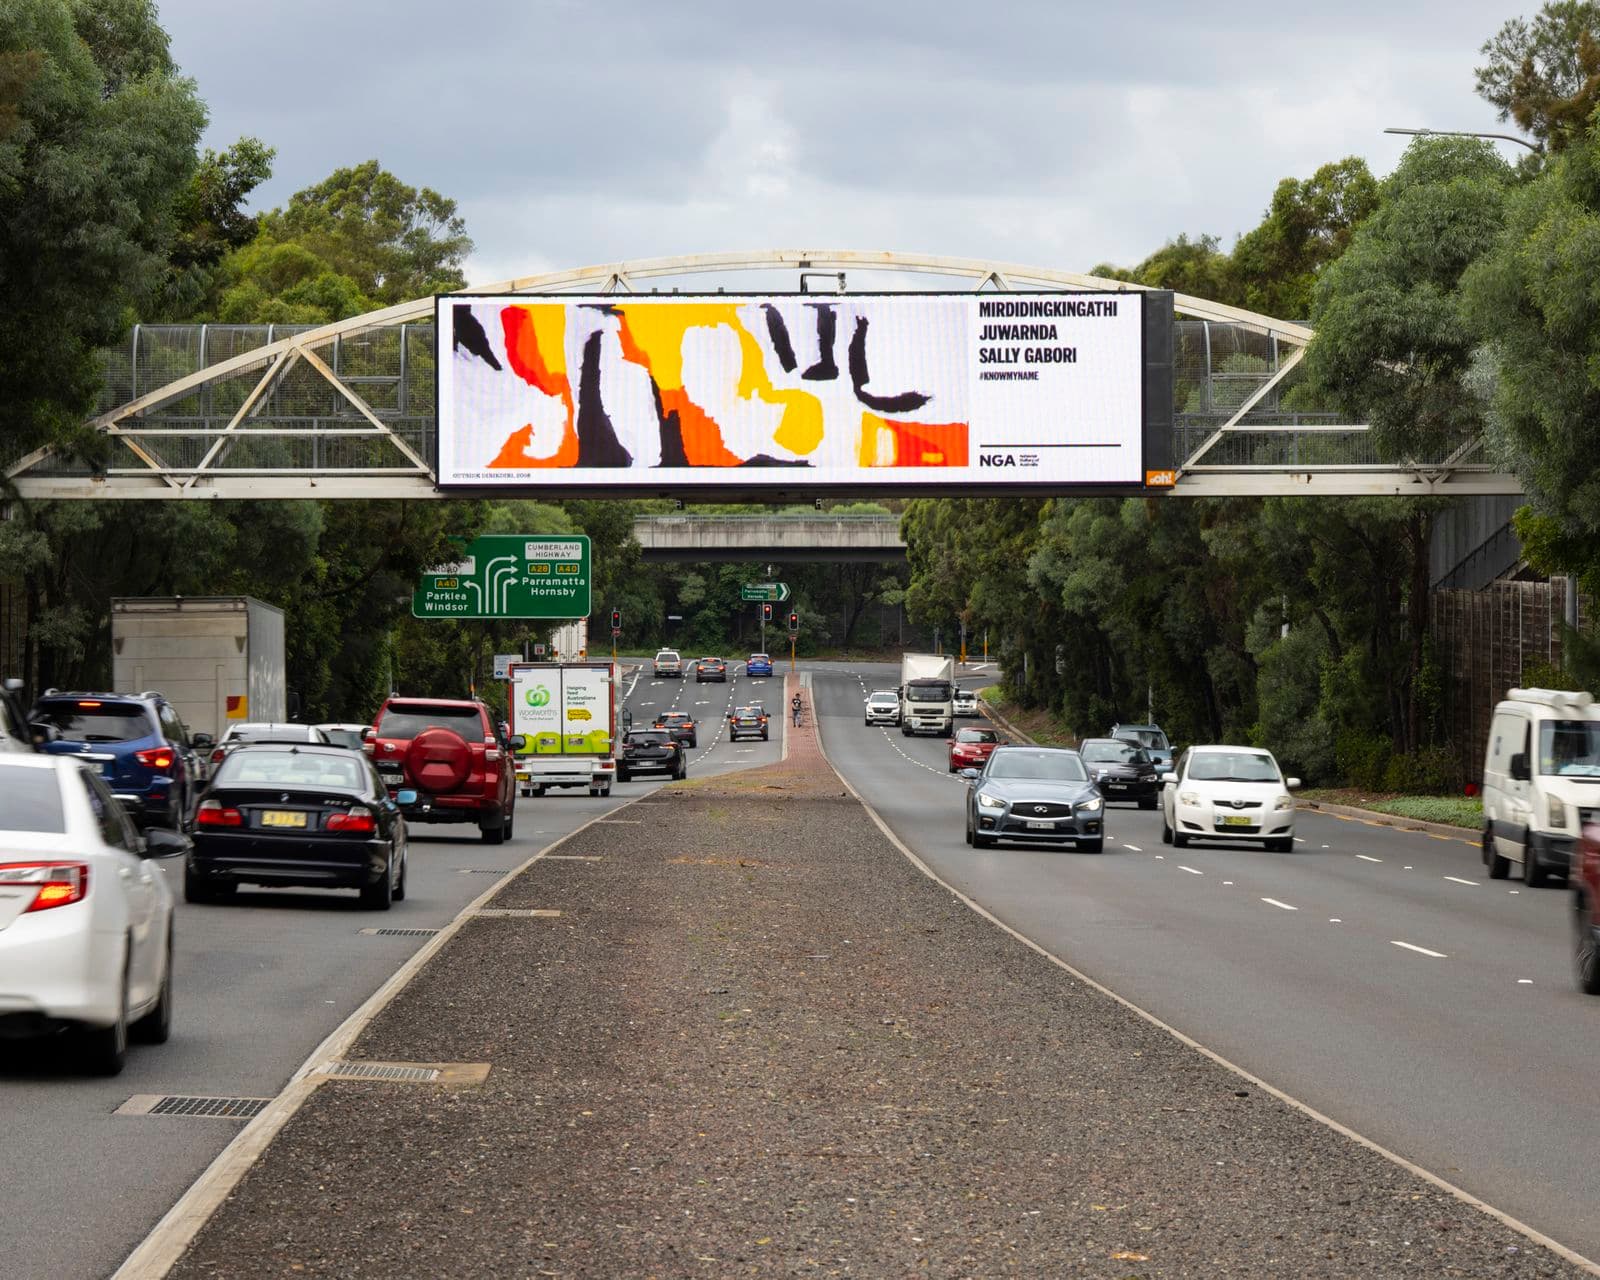 A billboard depicting an indigenous Australian artwork sits above a busy multilane road